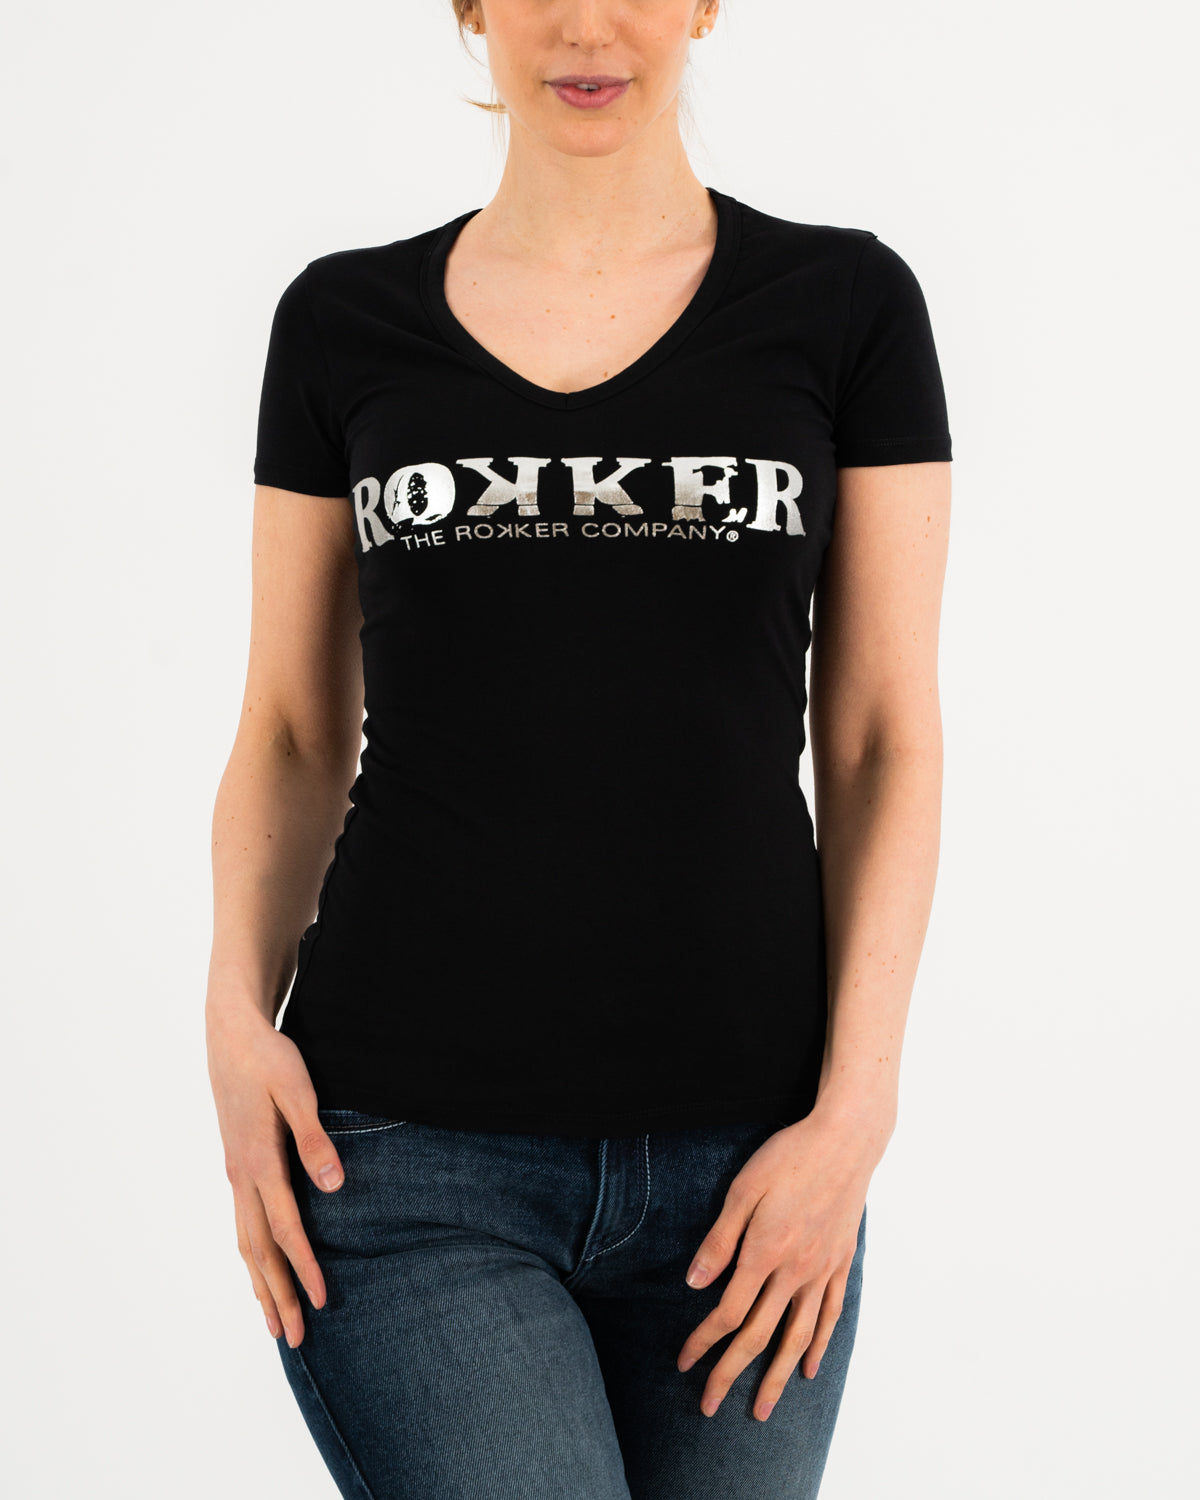 T-SHIRT LONG FEMME CORBA - THE ROKKER COMPANY Noir XL